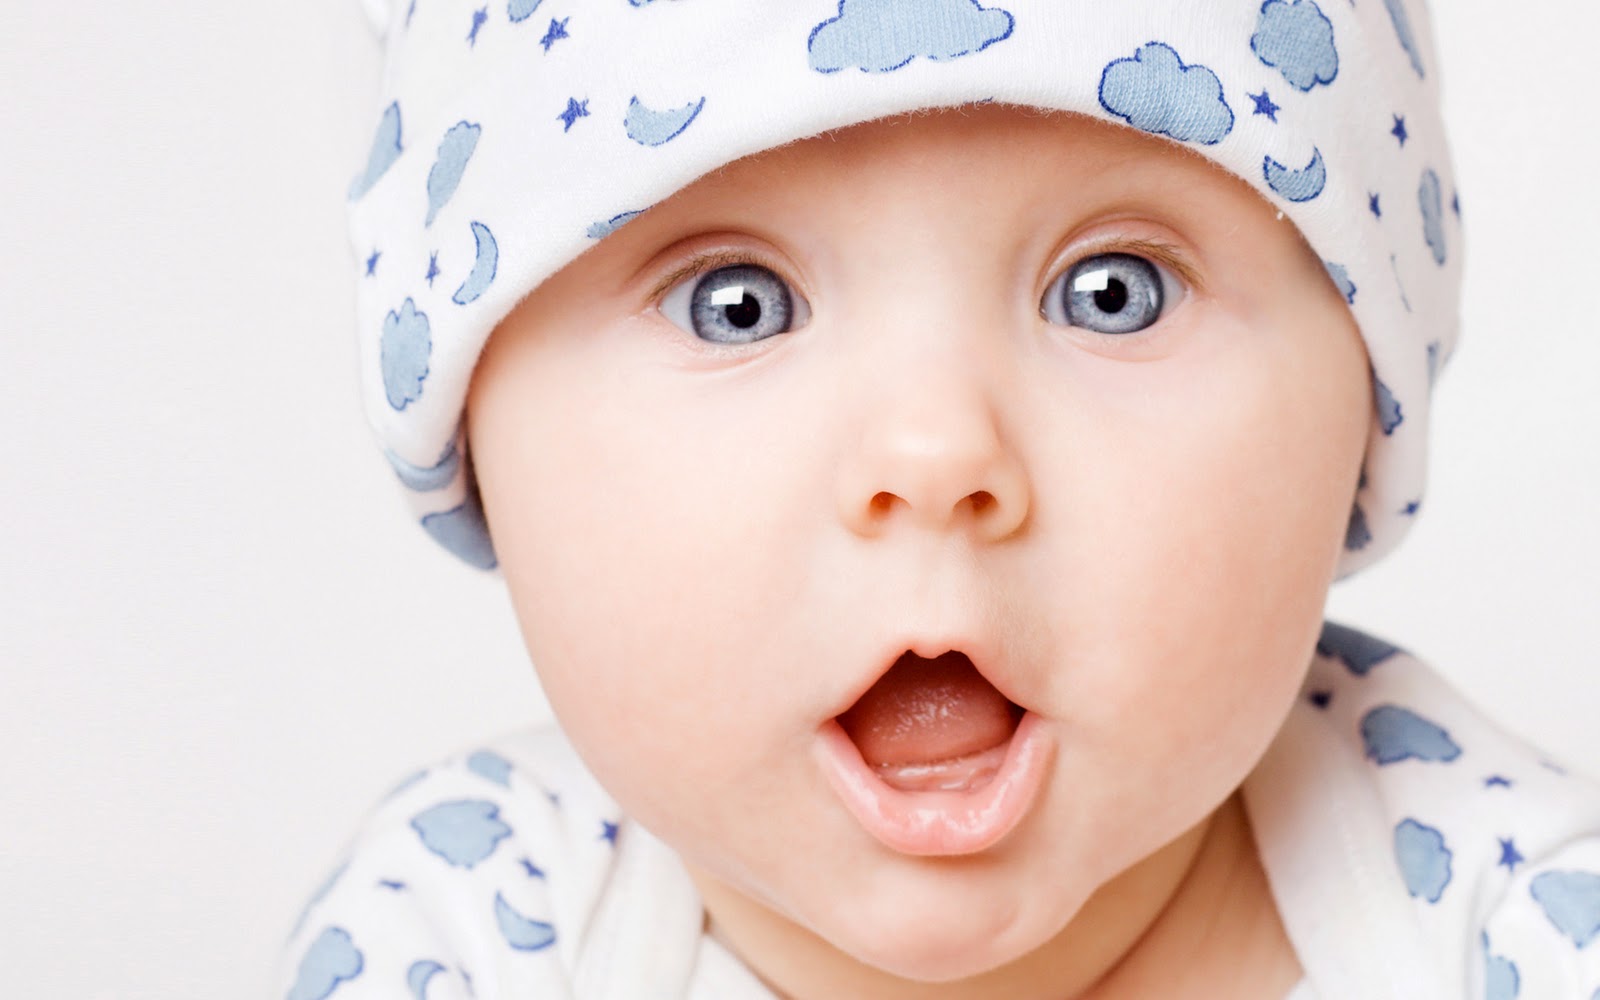 Wallpaper. — 21 Most Funniest Babies Wallpapers In HD